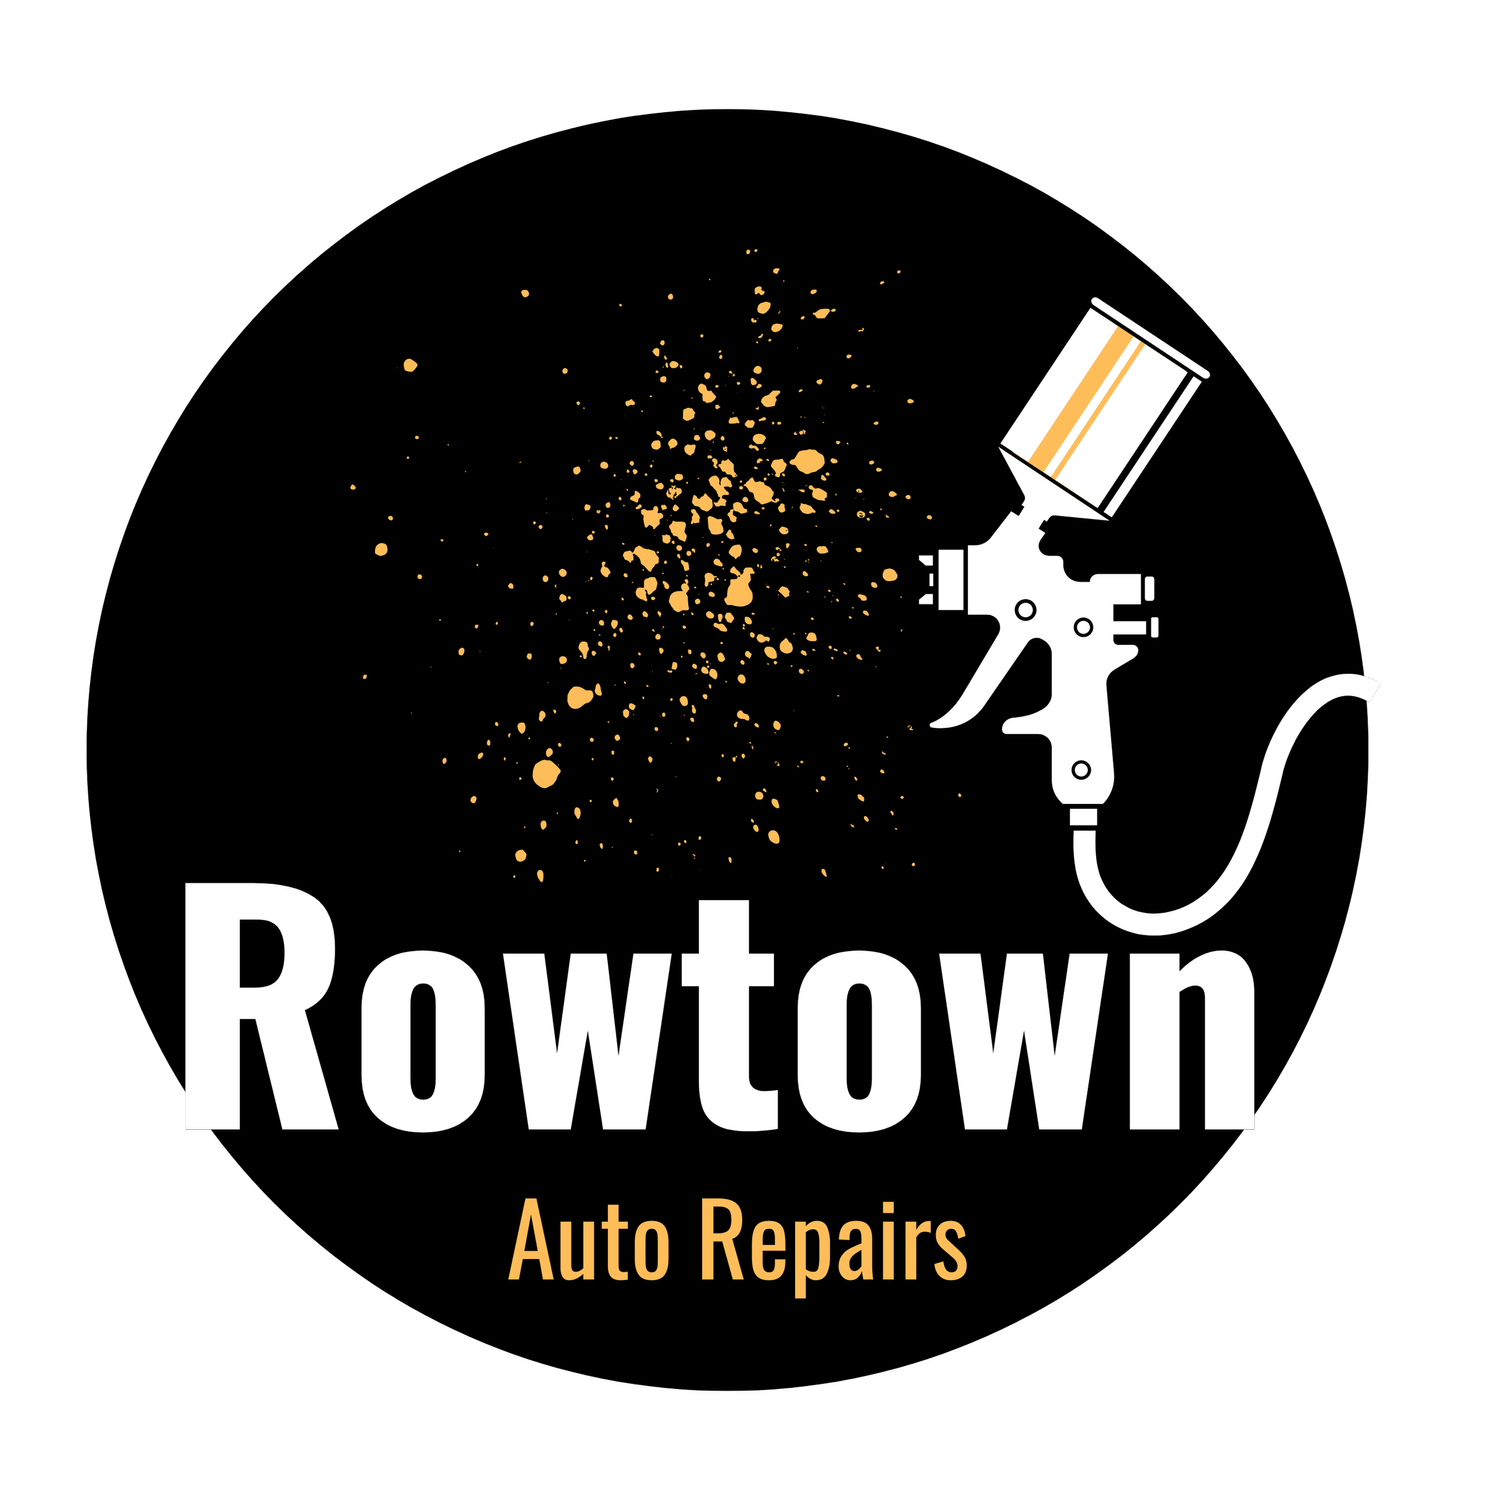 Rowtown Auto Repairs